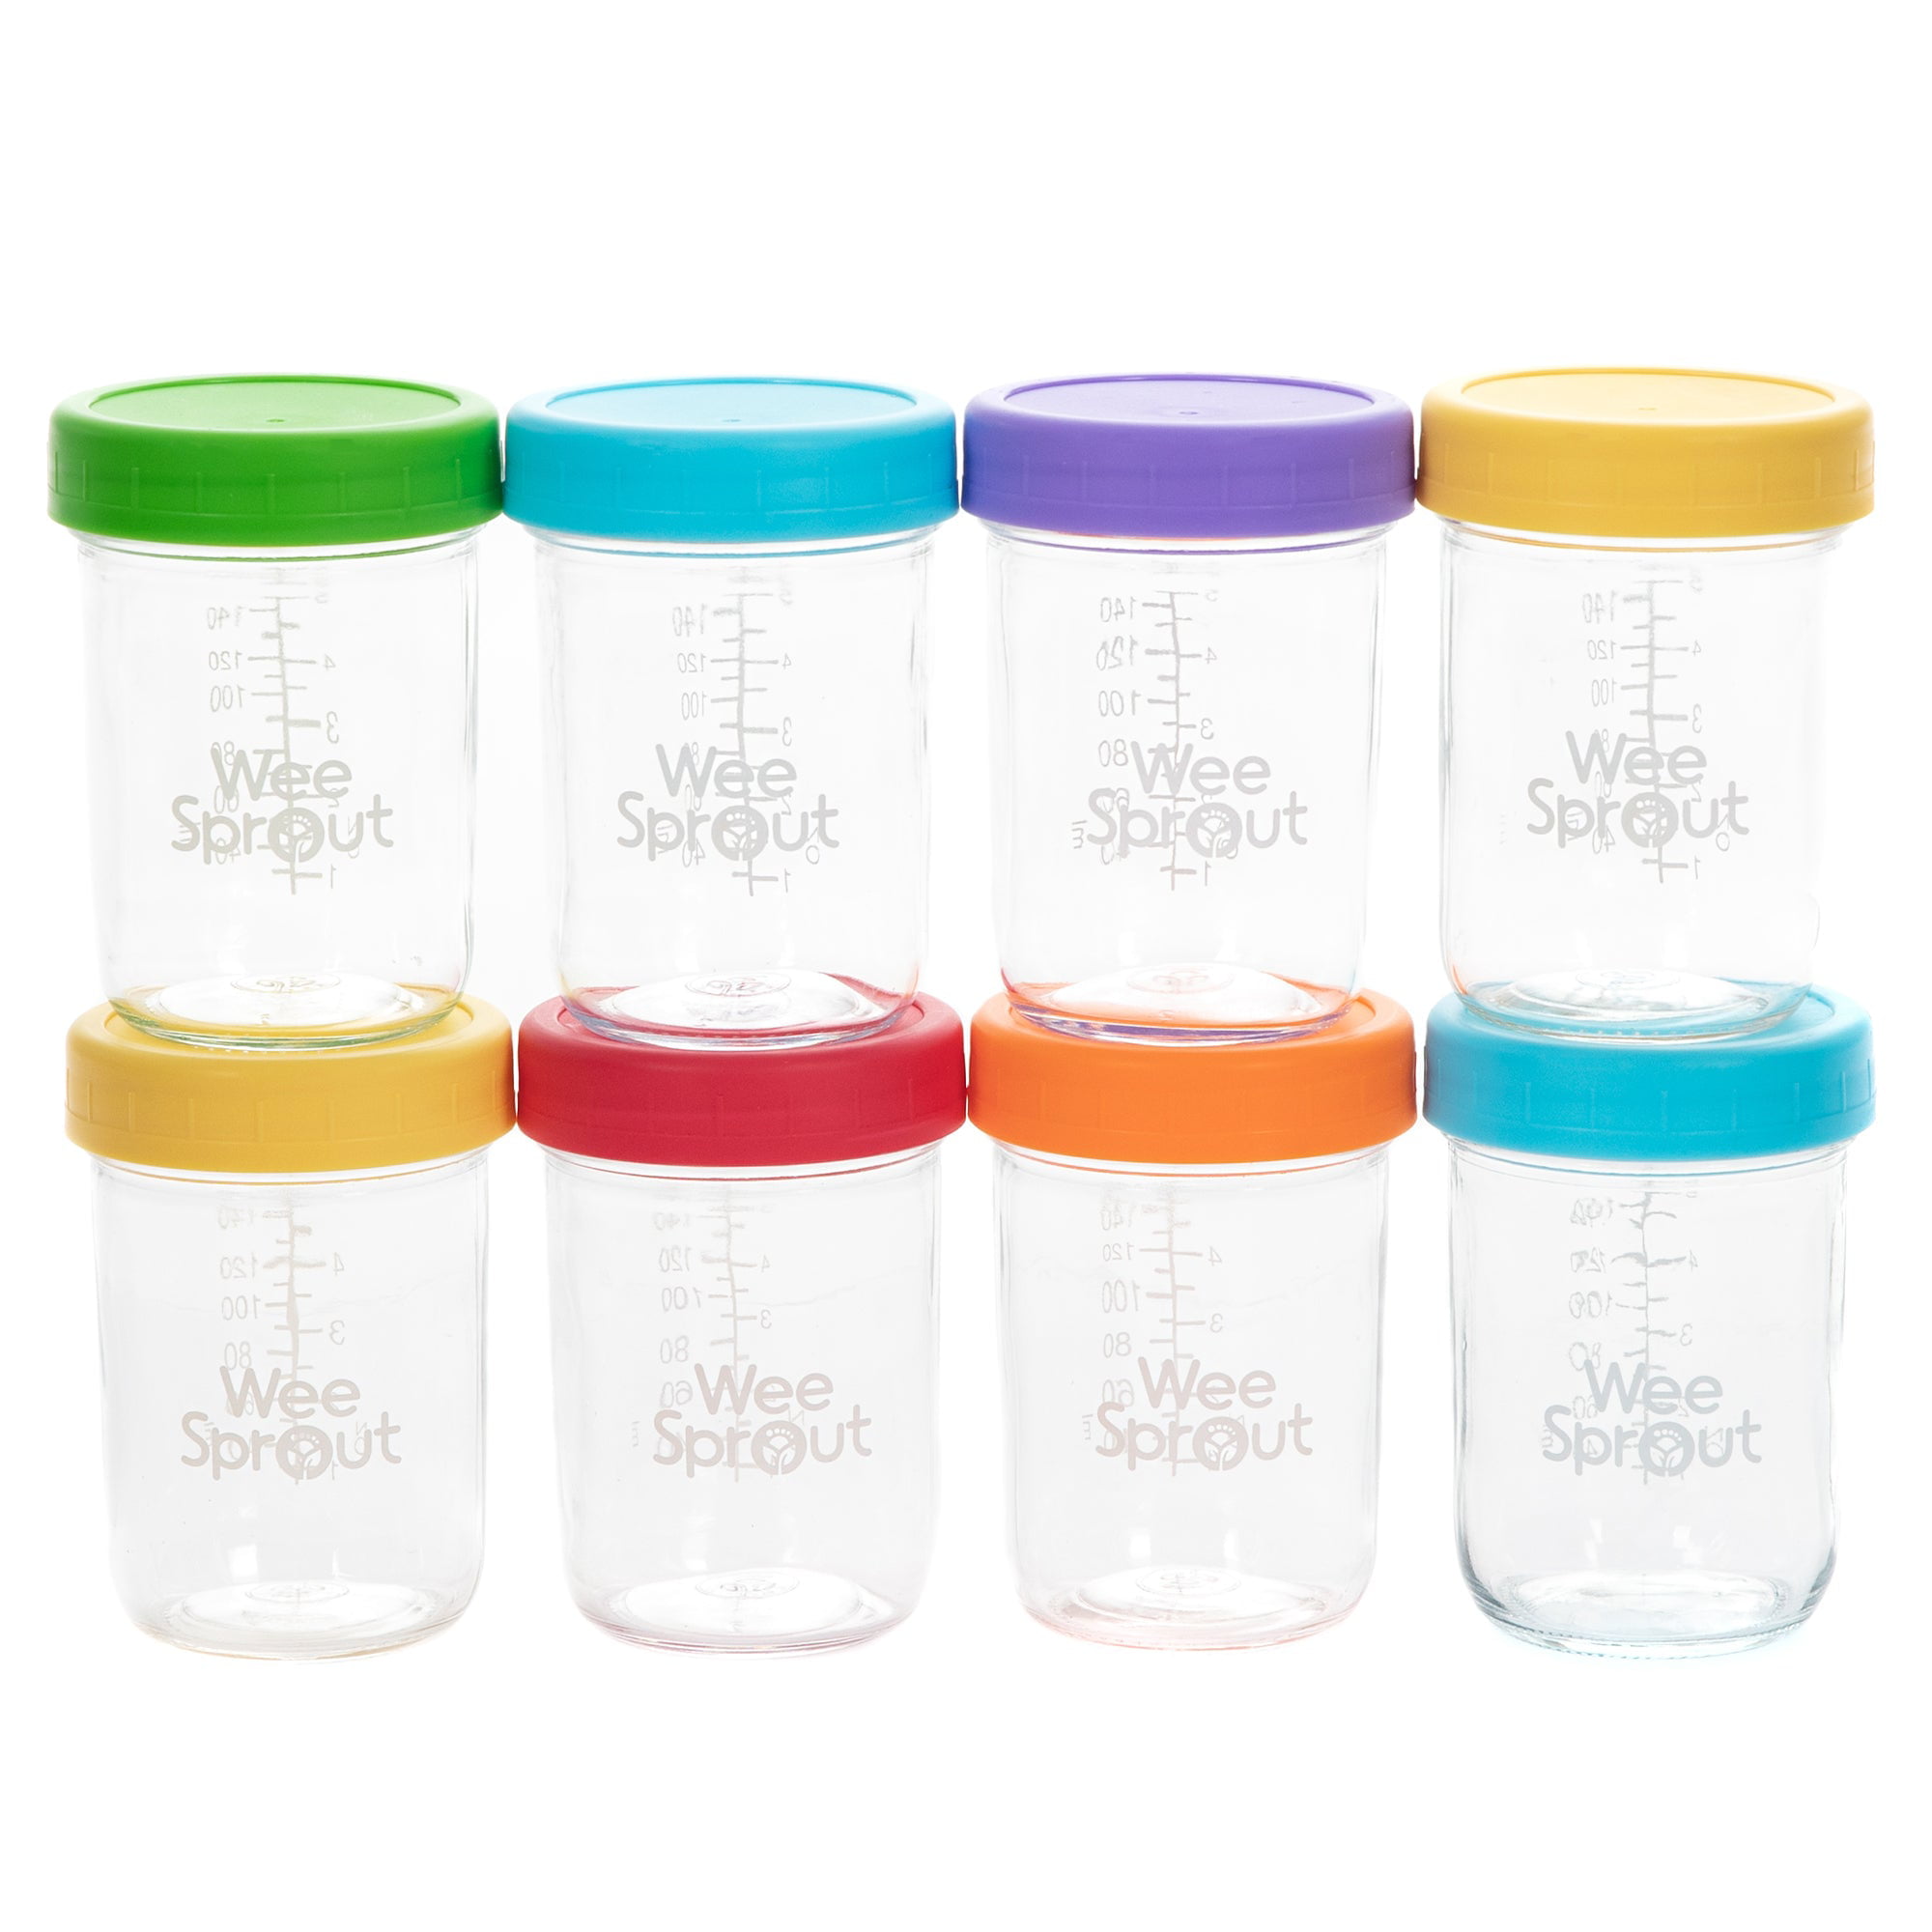 RowinsyDD 32-Pack Leakproof 4oz Glass Baby Food Jars with Lids - BPA Free, Freezer & Microwave Safe